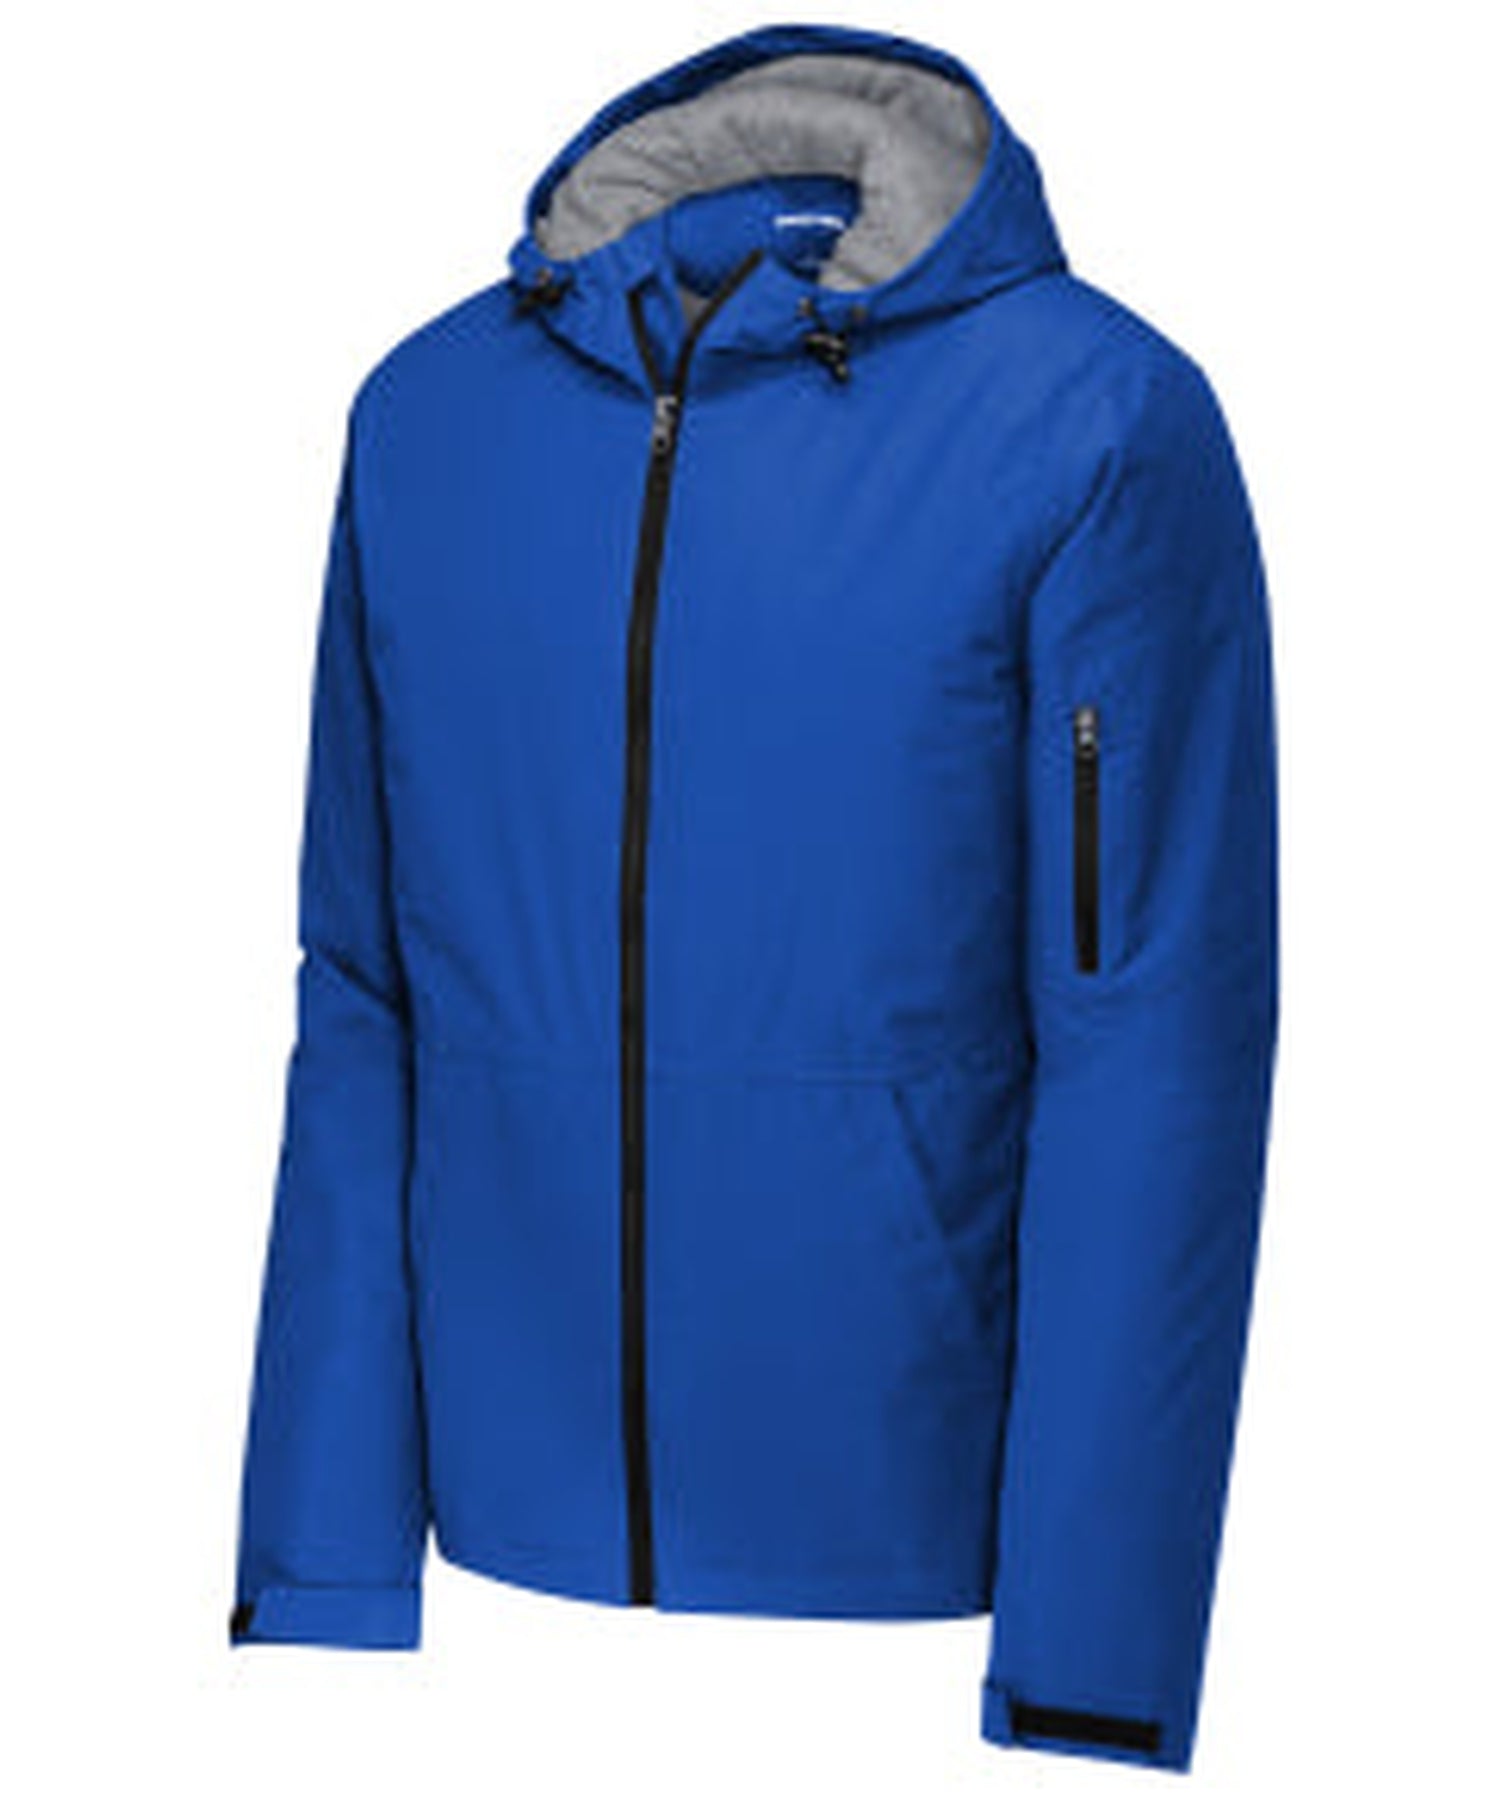 Waterproof Insulated Jacket (8481178714389)